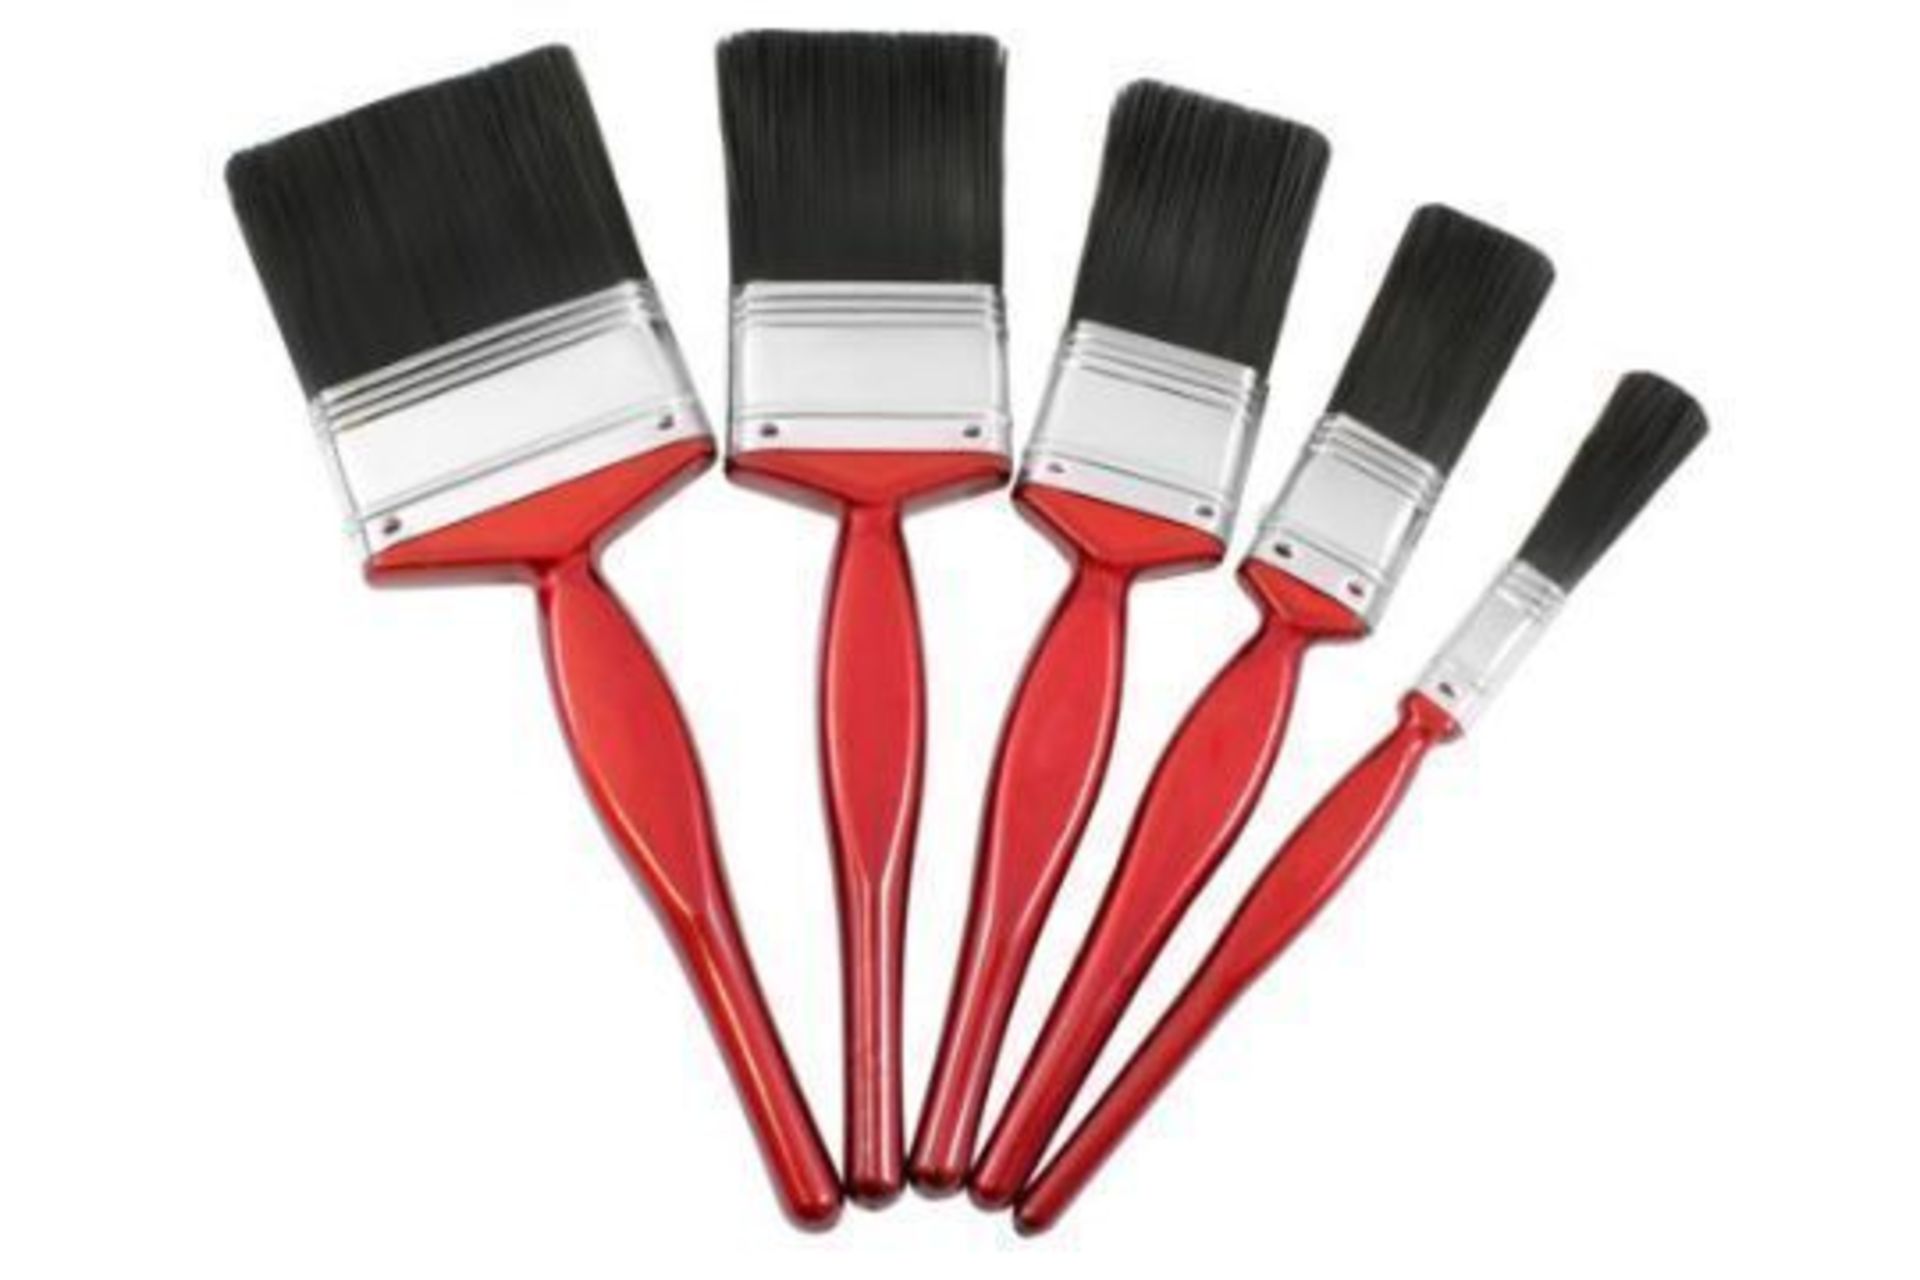 x2 Packs Of New Dekton 5pc Brush Sets